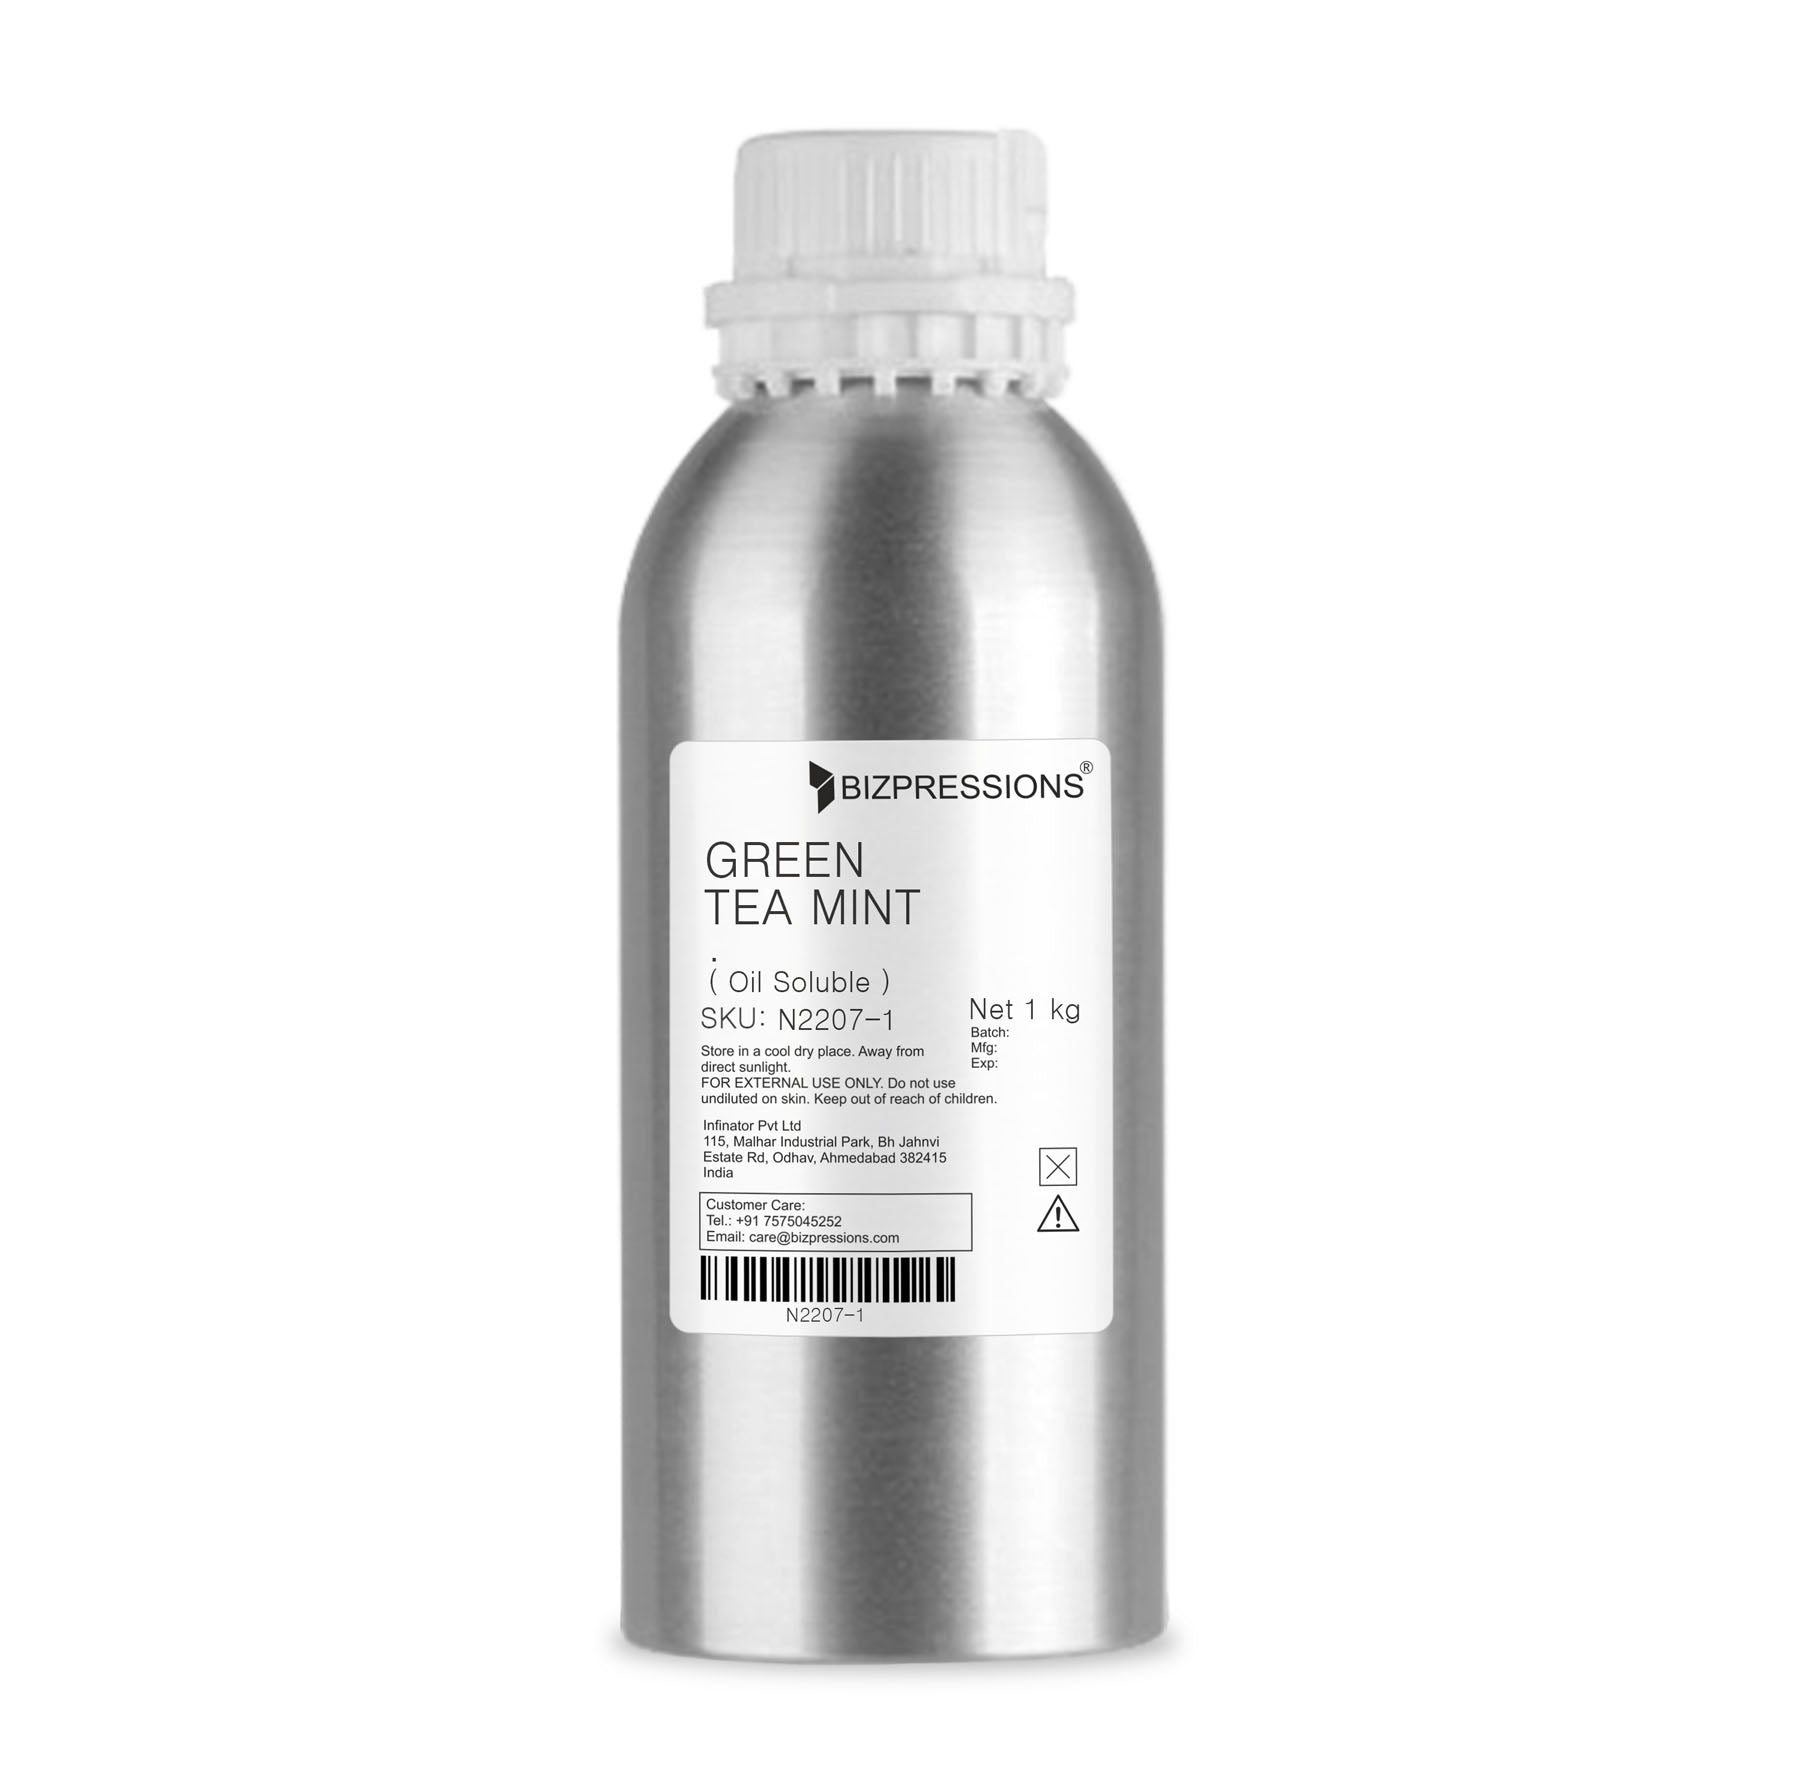 GREEN TEA MINT - Fragrance ( Oil Soluble ) - 1 kg